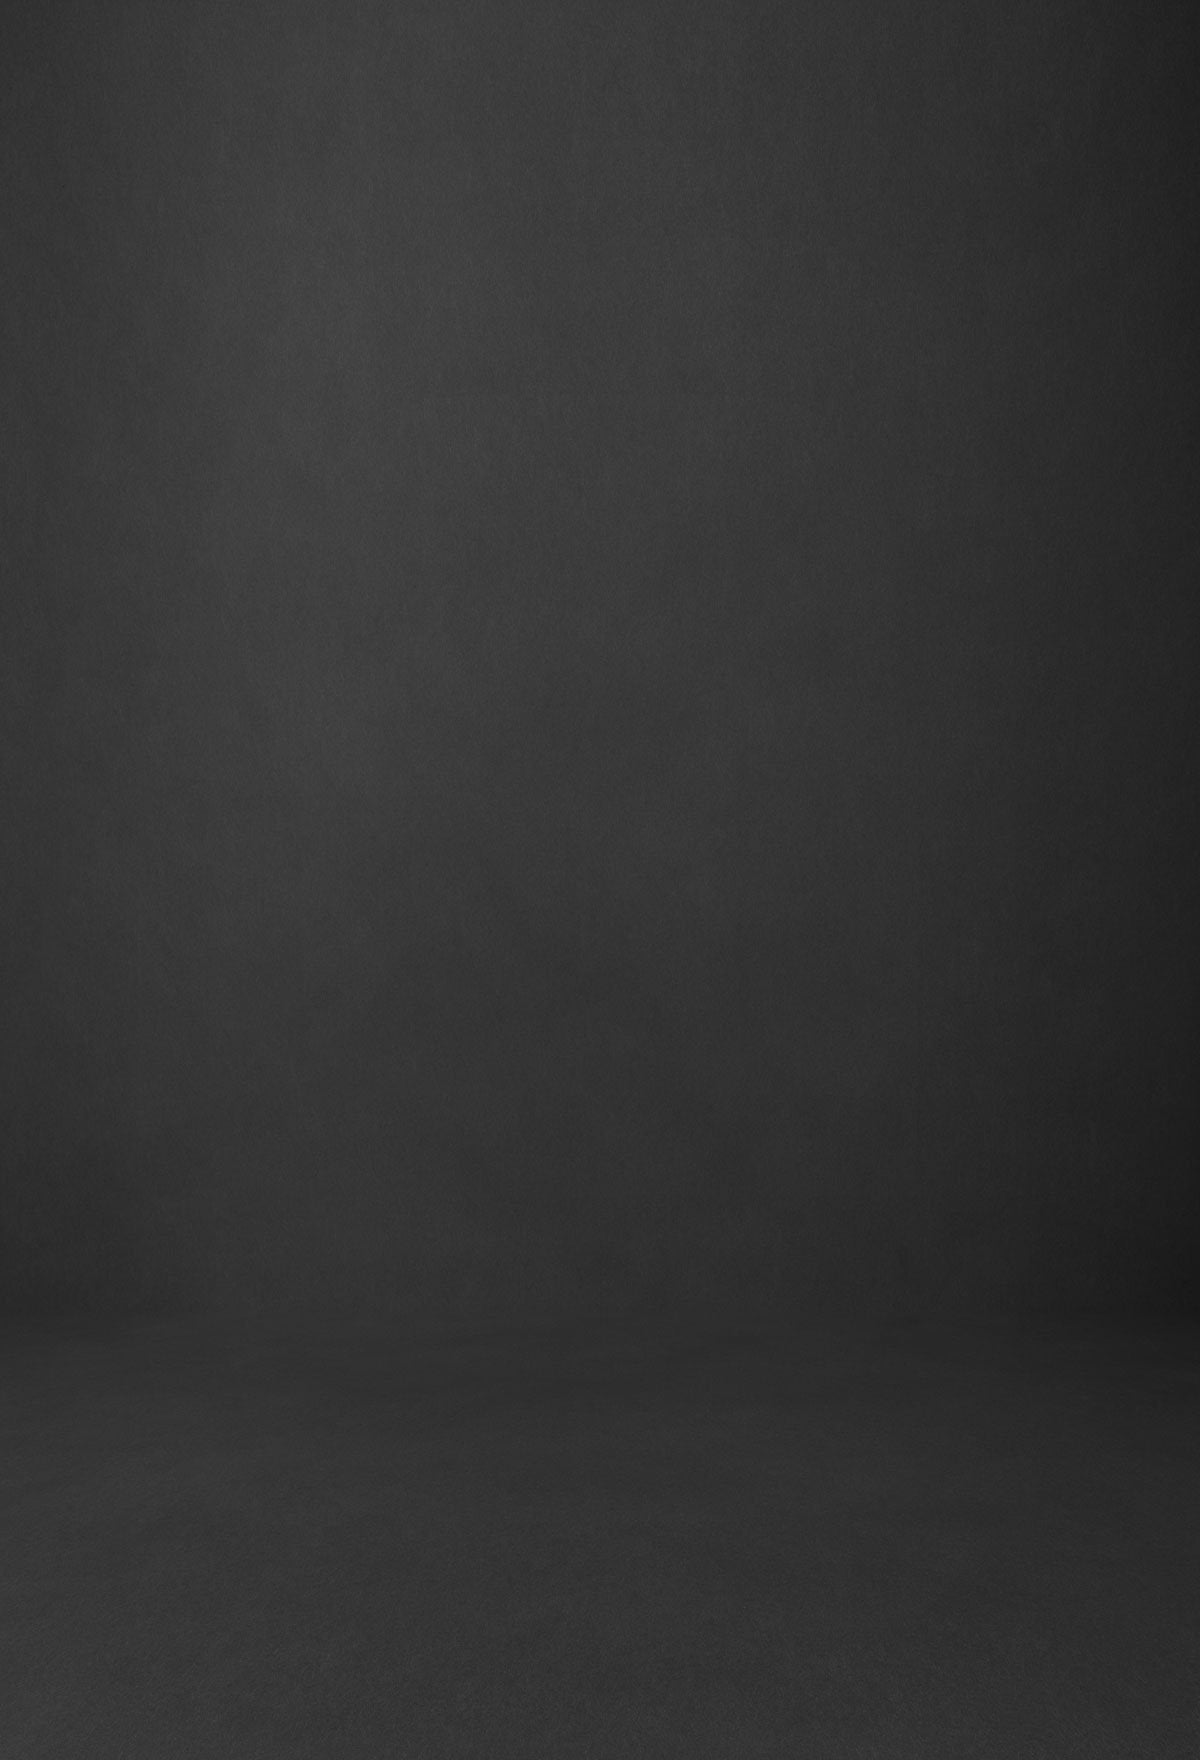 Kate Dunkle schwarze Texture Hintergrund  fotos - Katebackdrop.de